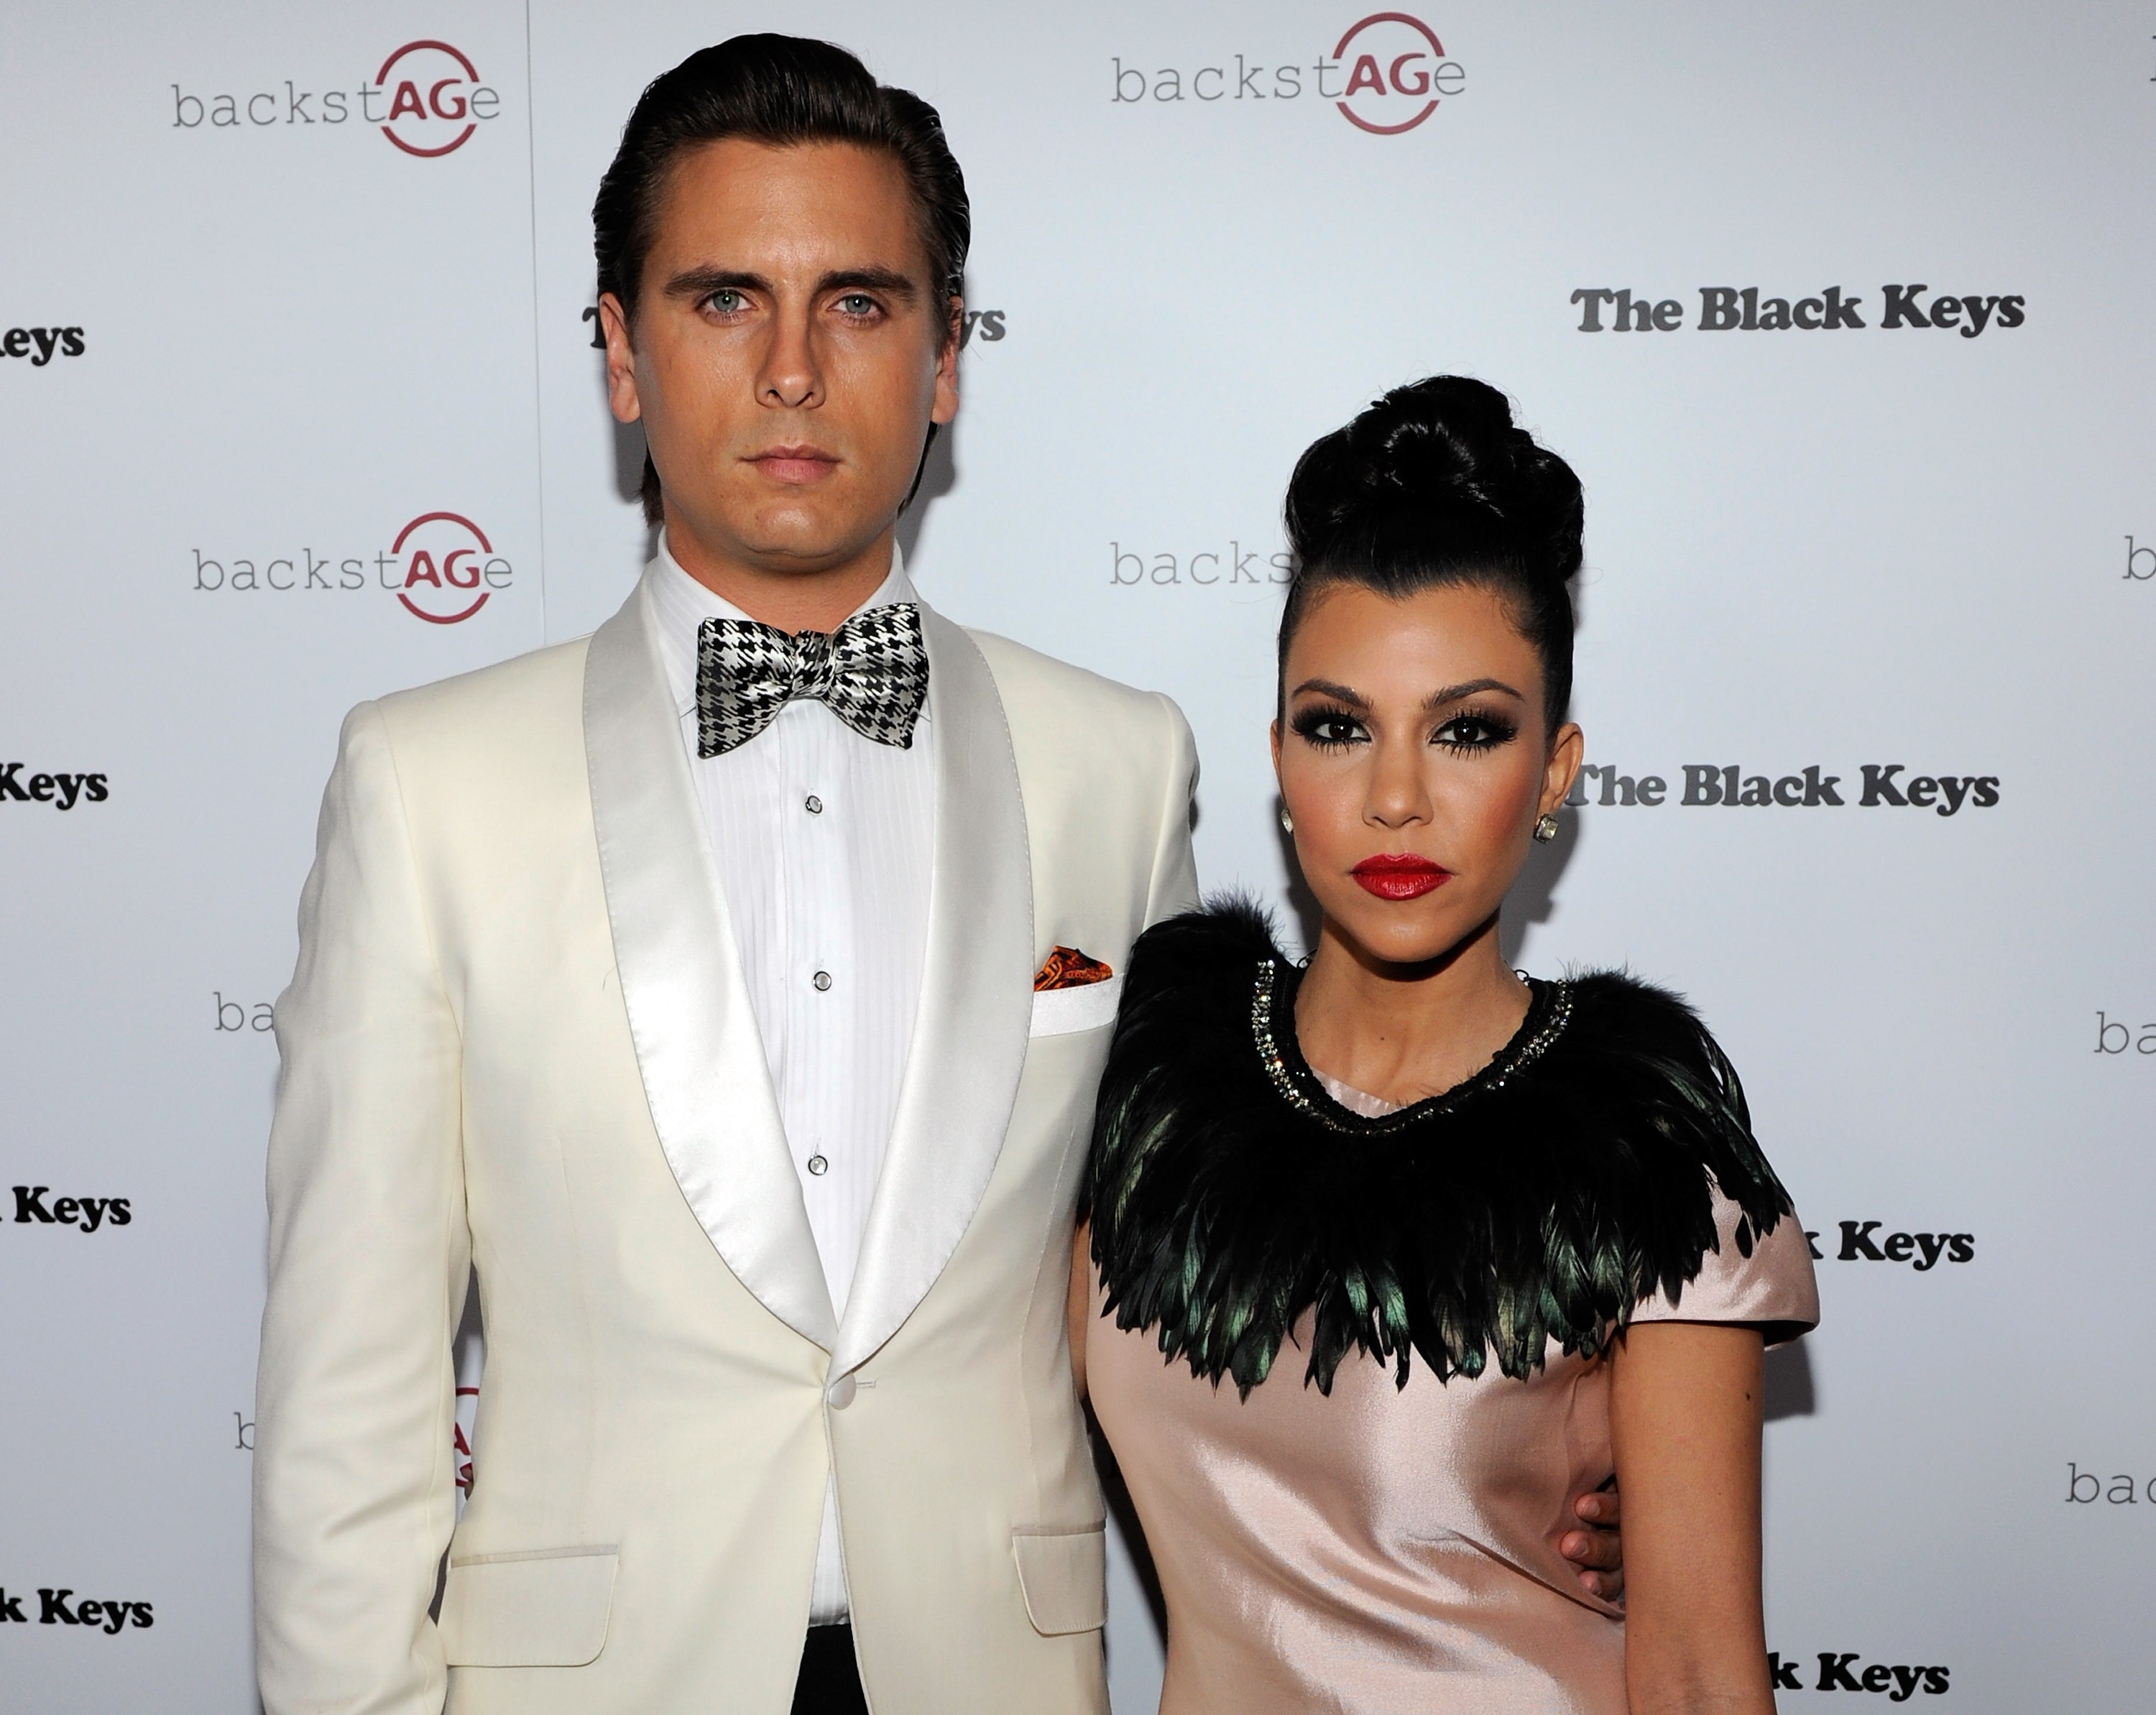 Kourtney Kardashian e Scott Disick (Foto: Getty Images)